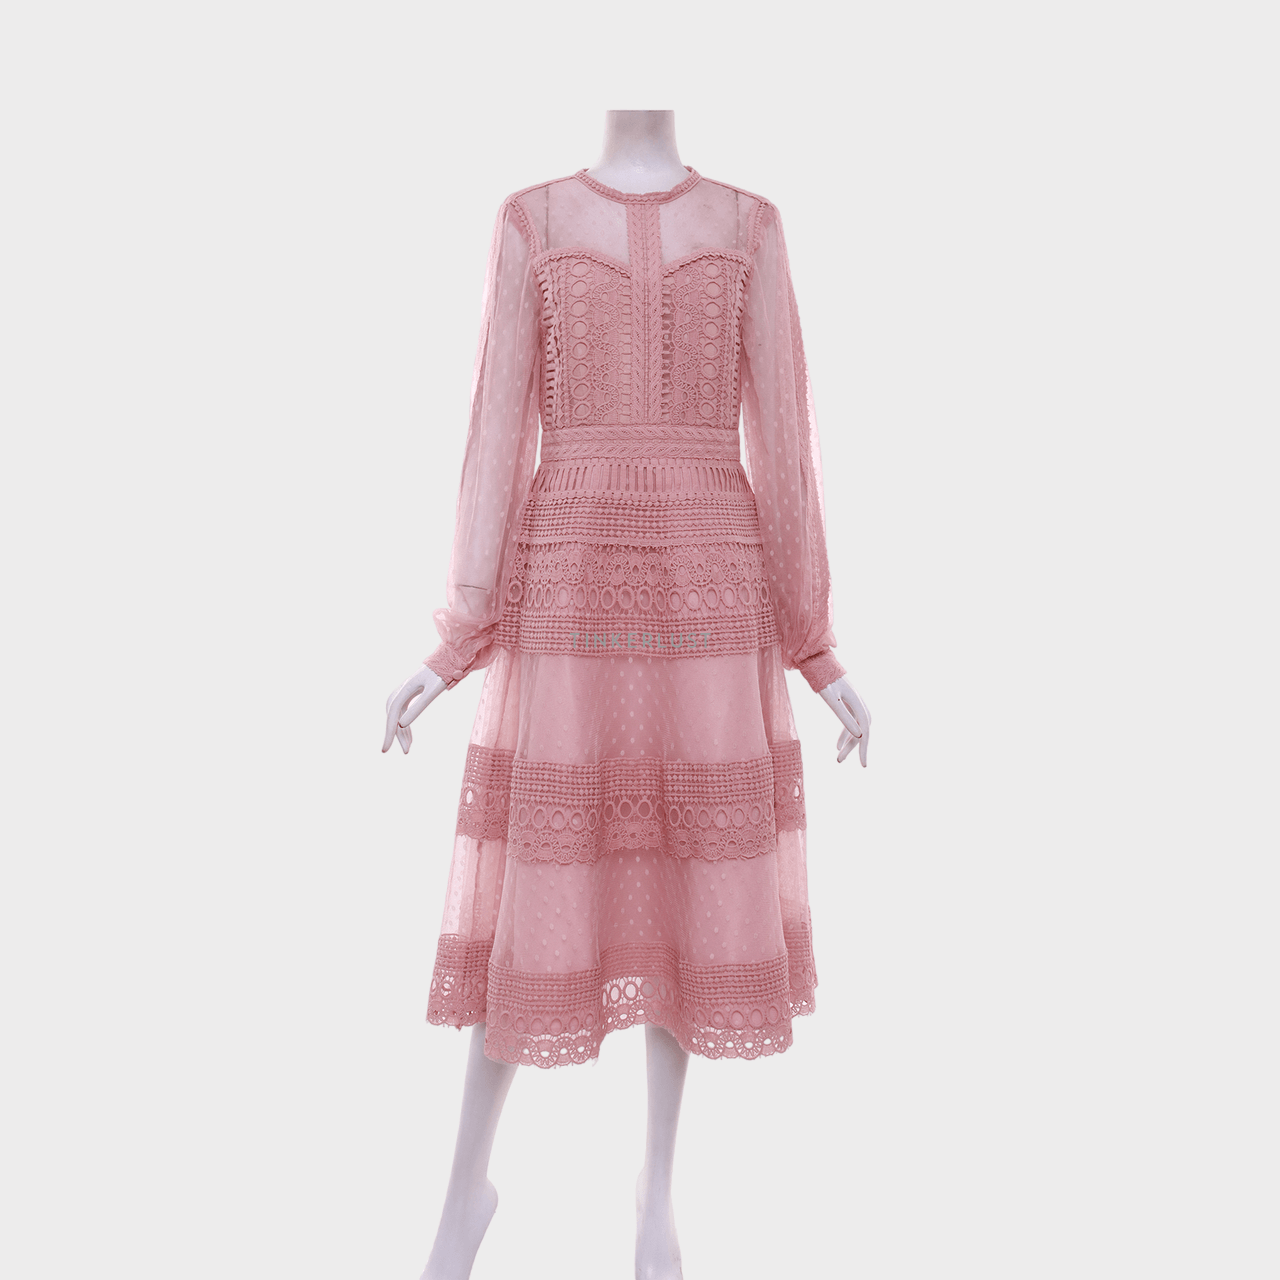 Poshture Dusty Pink Midi Dress